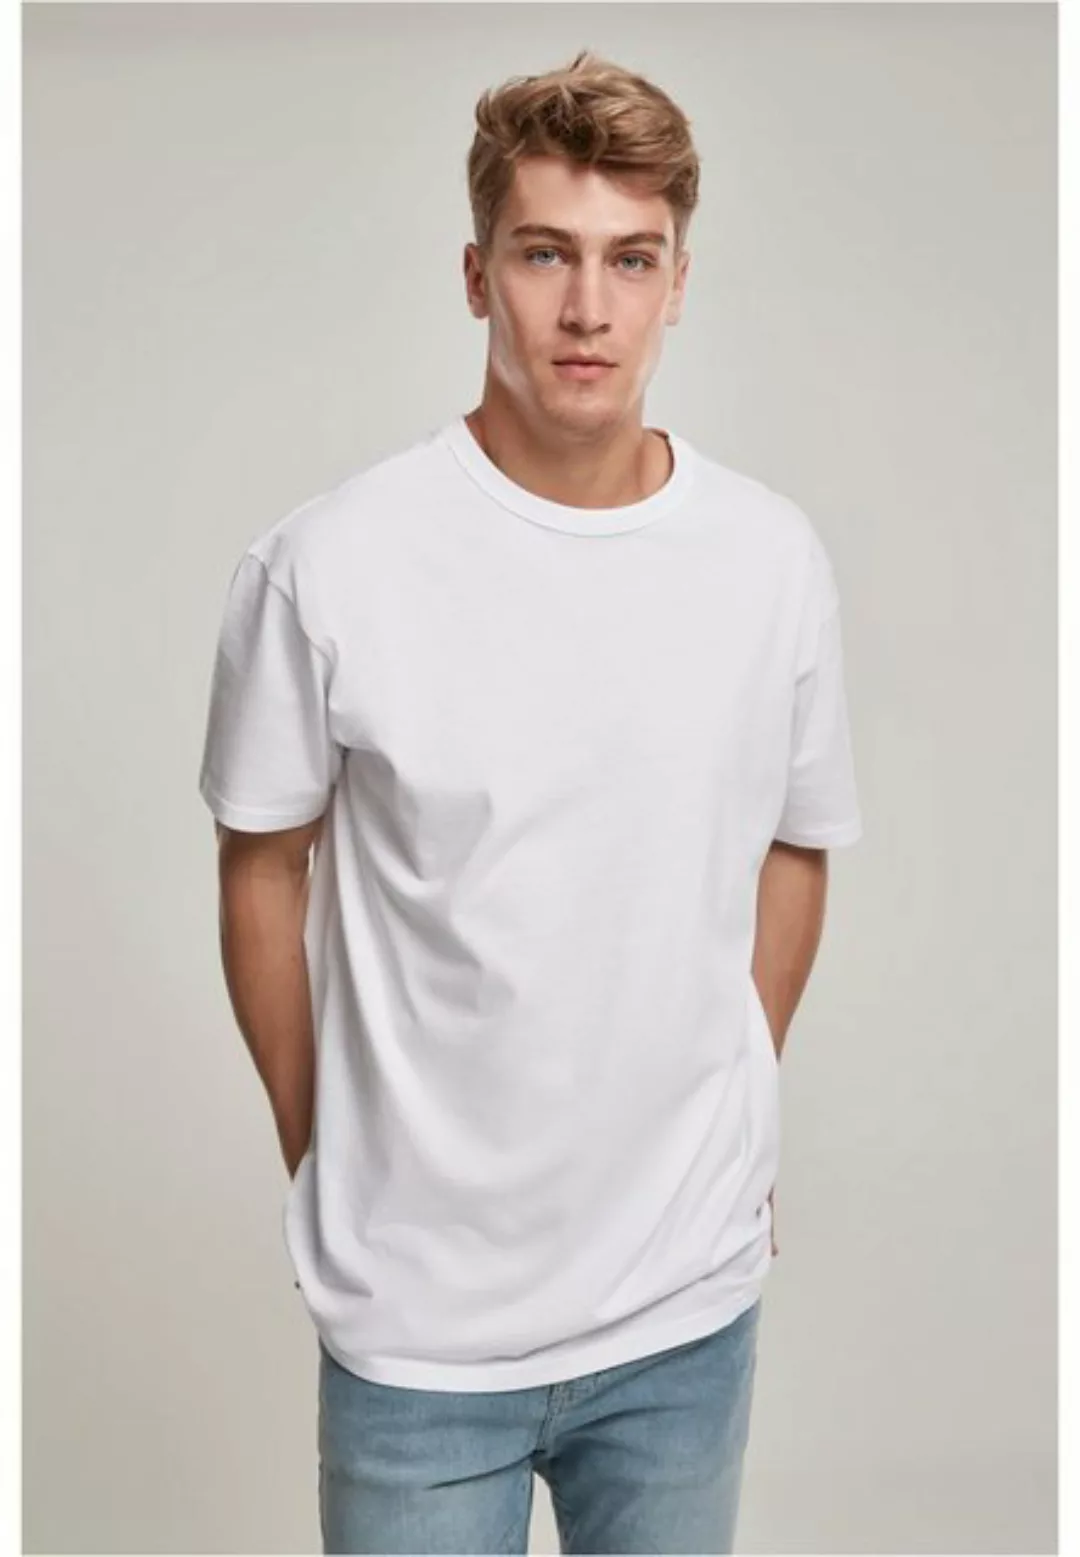 Urban Classics T-Shirt Herren ORGANIC BASIC TEE TB3085 Dunkelblau Midnightn günstig online kaufen